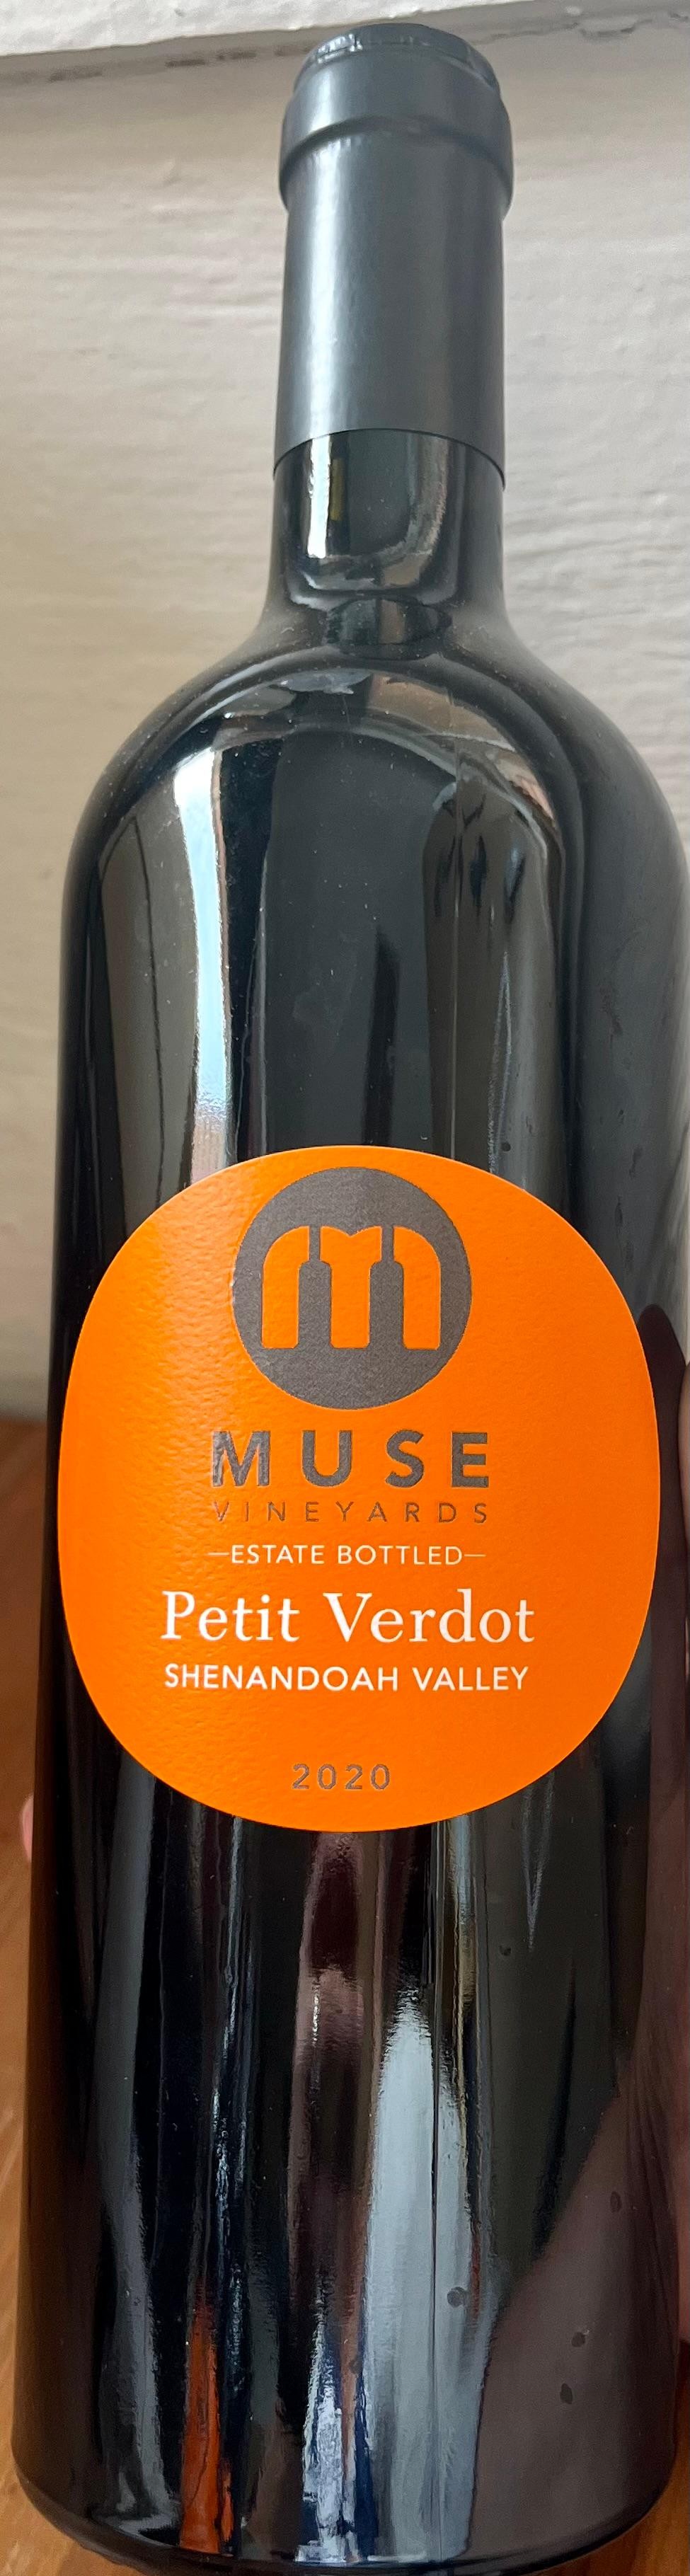 Muse Petit Verdot